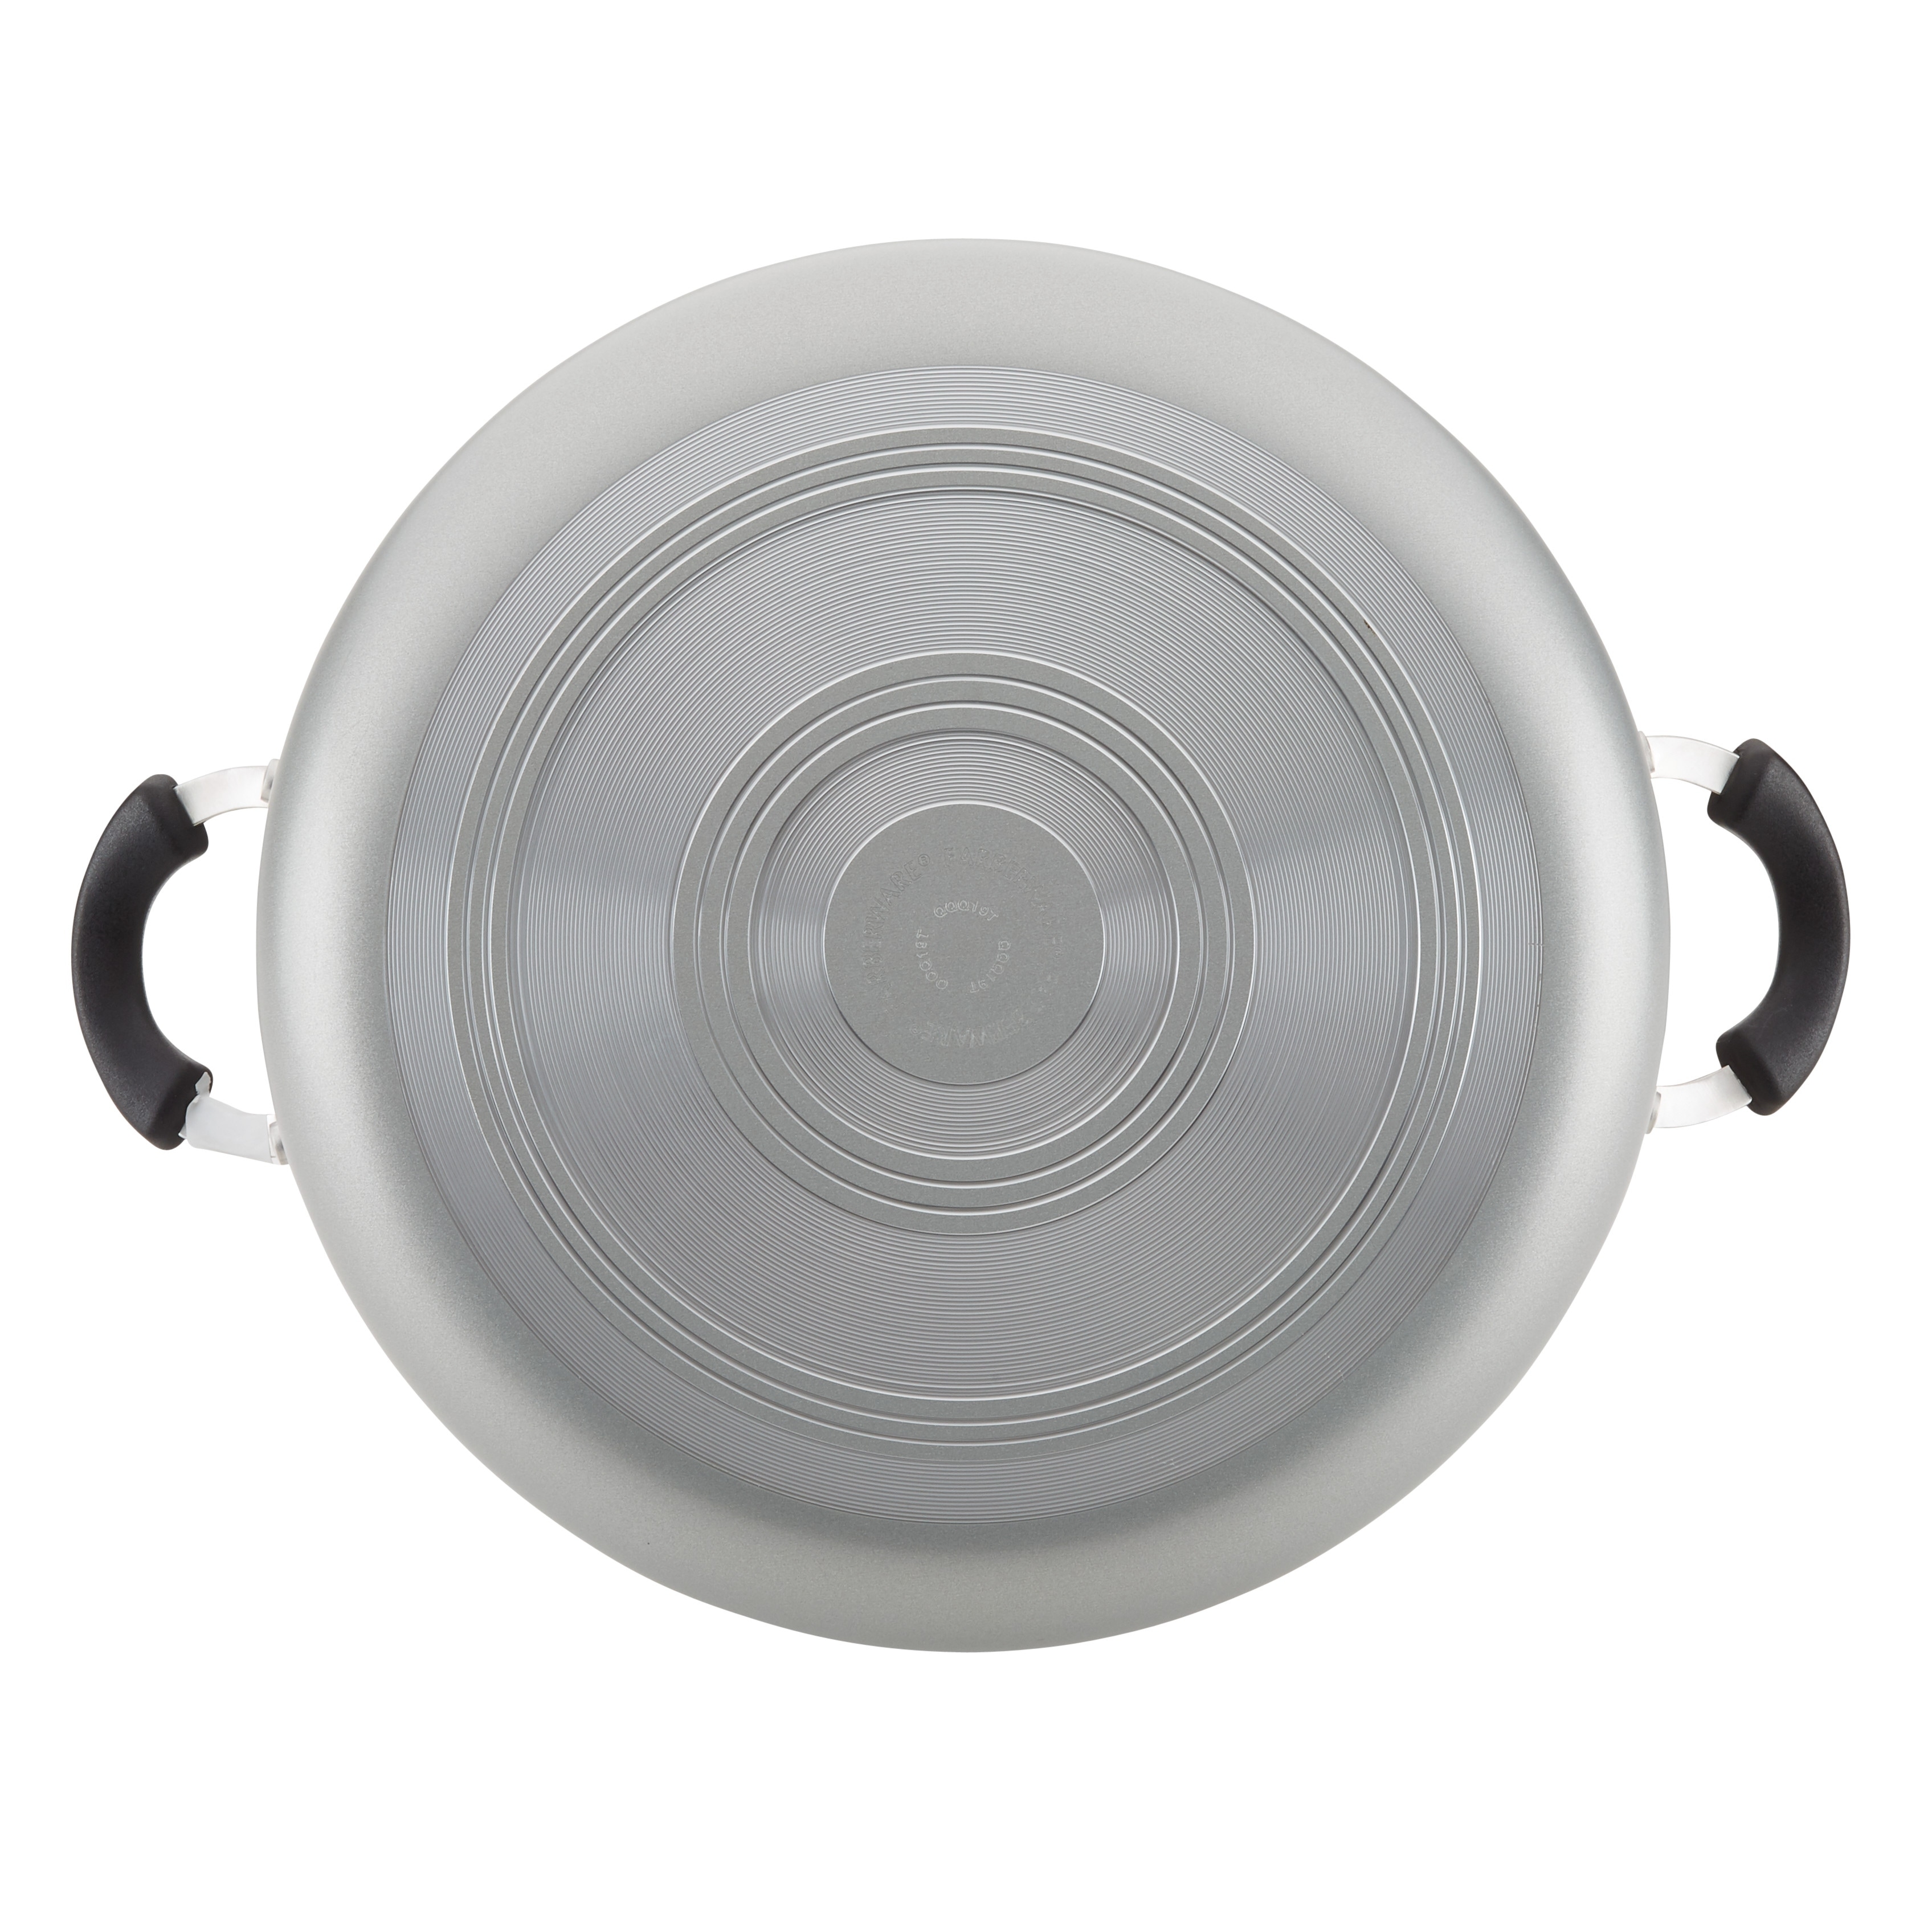 Farberware Cookware Aluminum Nonstick Covered Stockpot, 10.5-Quart, Silver  - Bed Bath & Beyond - 38405891